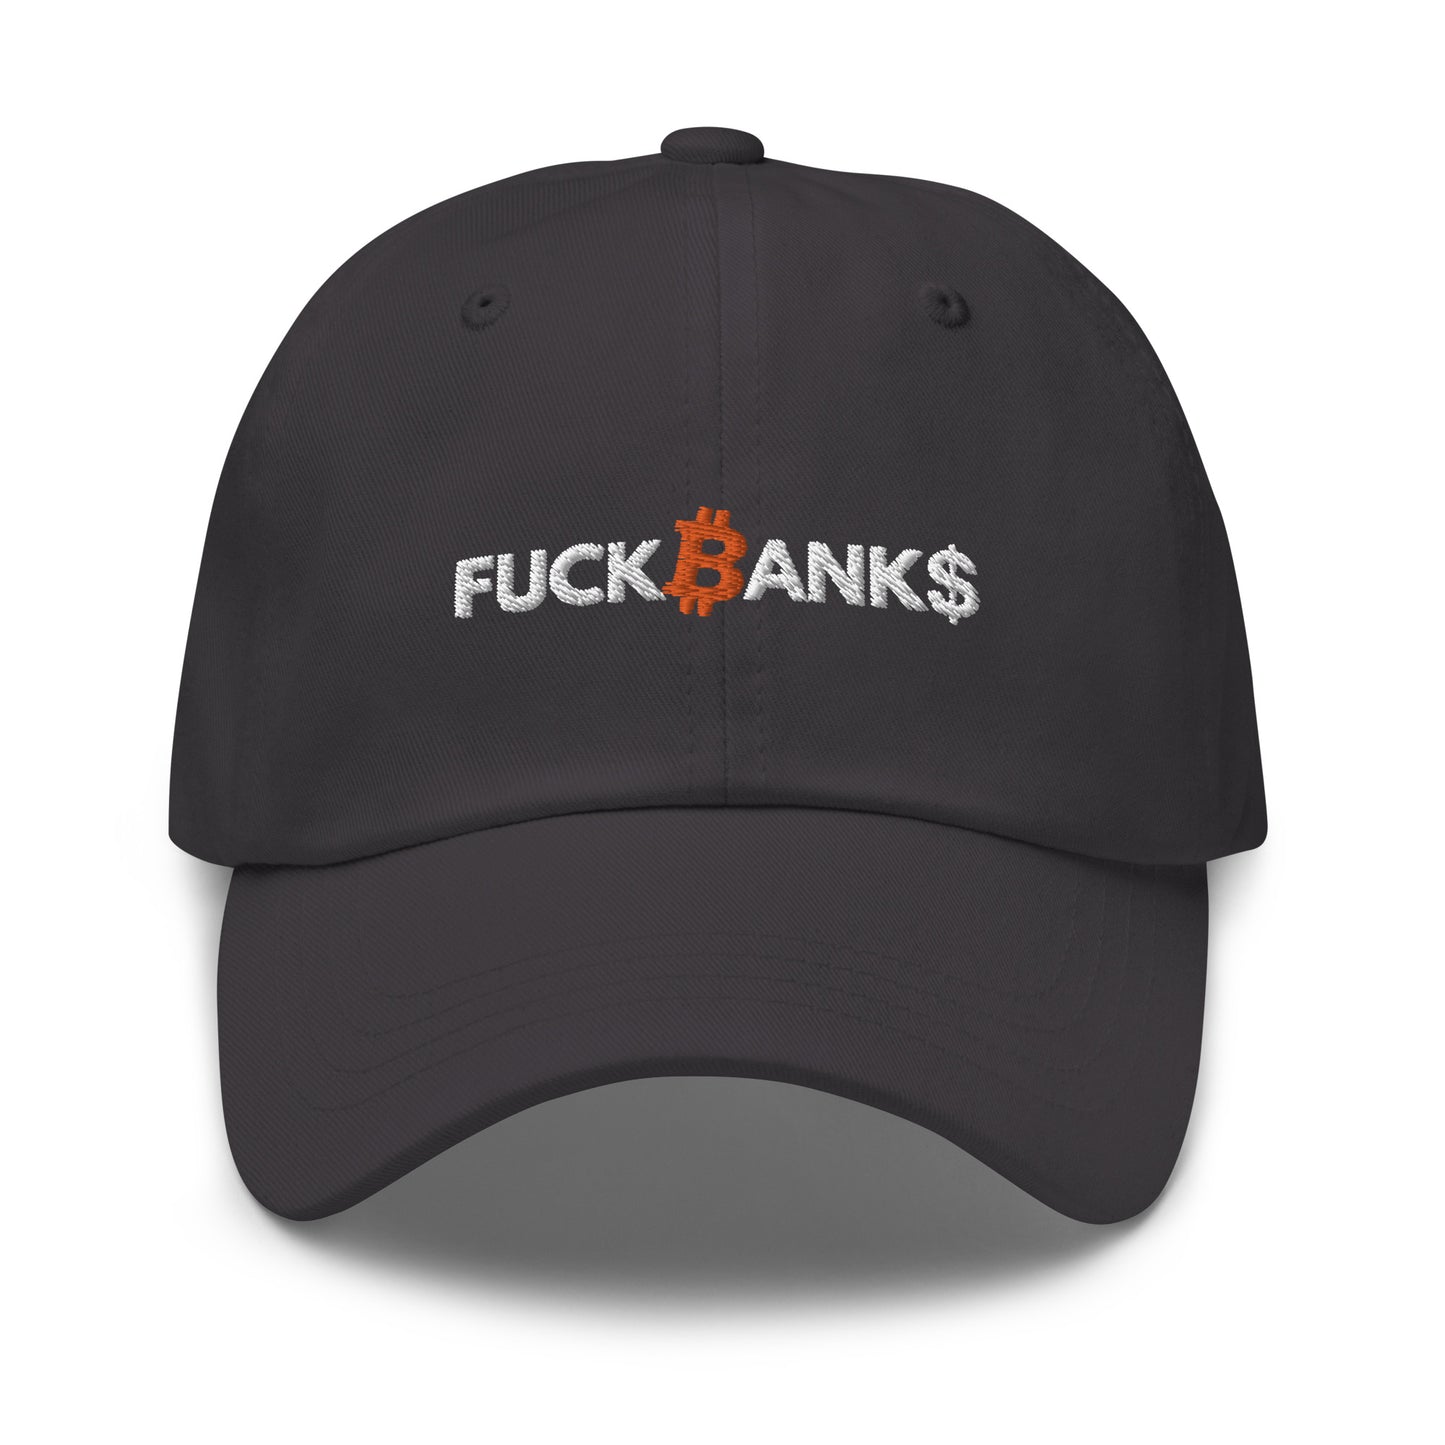 FUCK BANKS Comfort Basecap